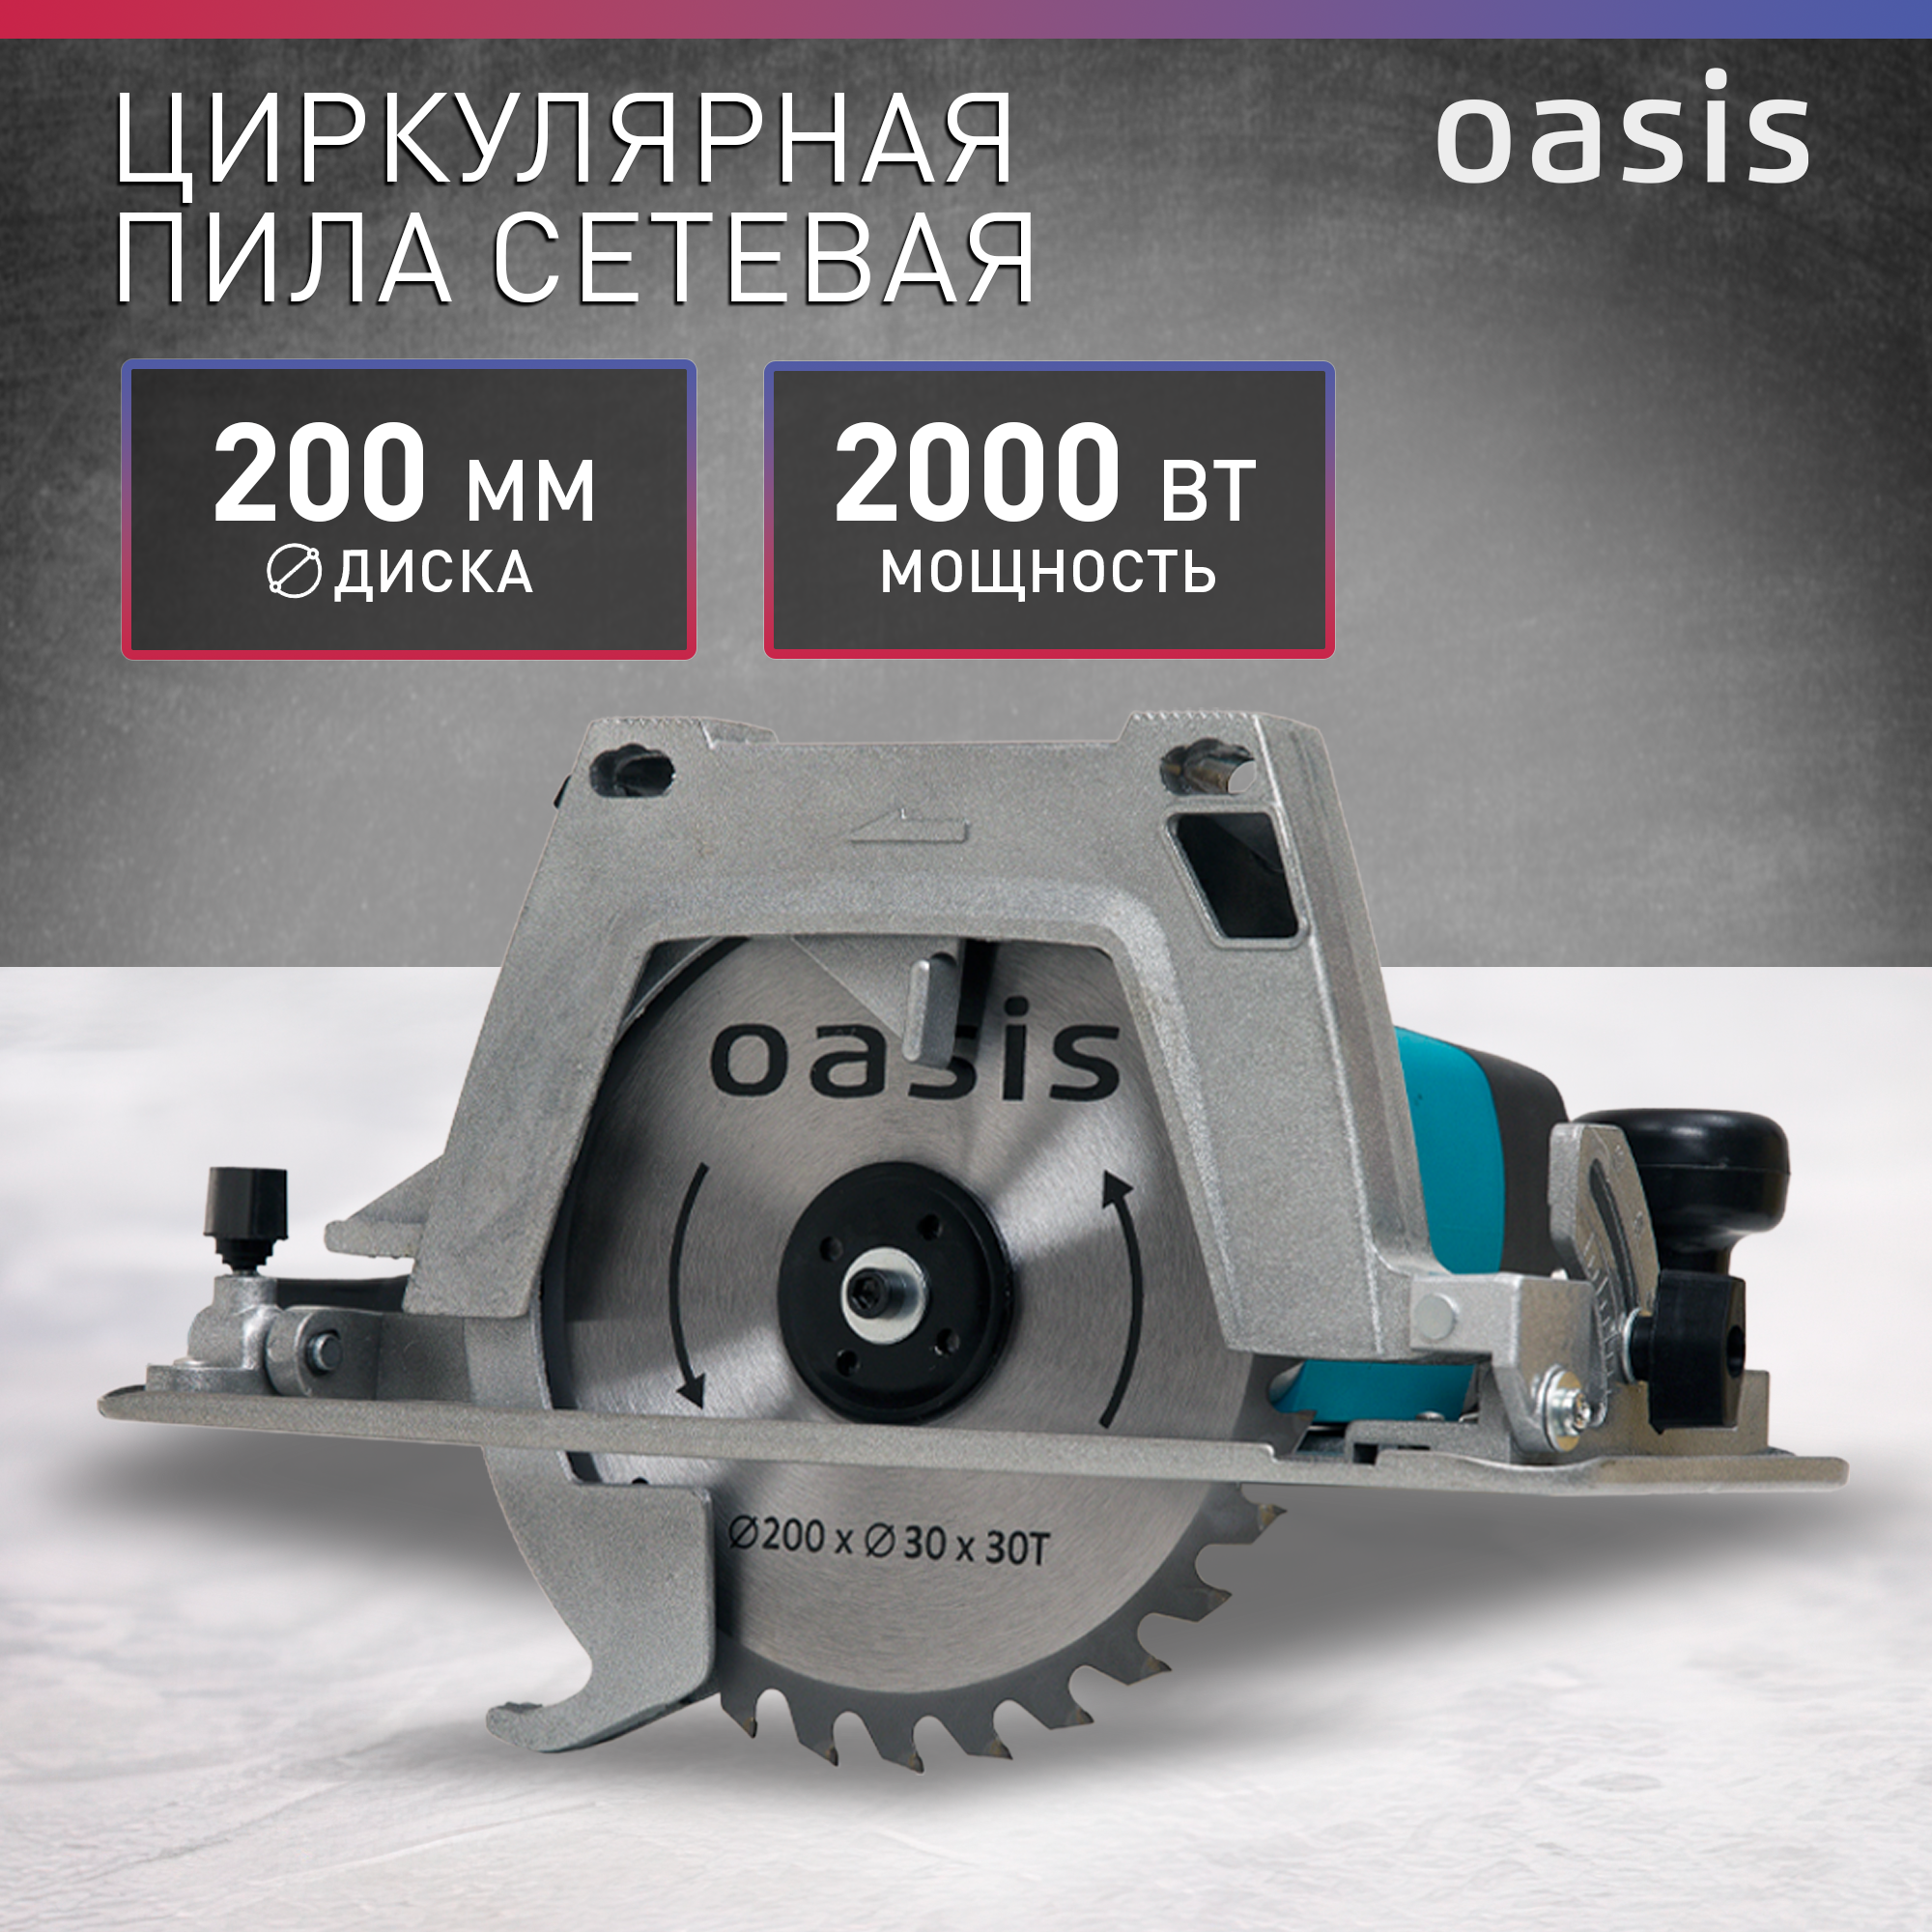 Электрическая циркулярная пила Oasis PC-210, 2000 Вт, 210 мм